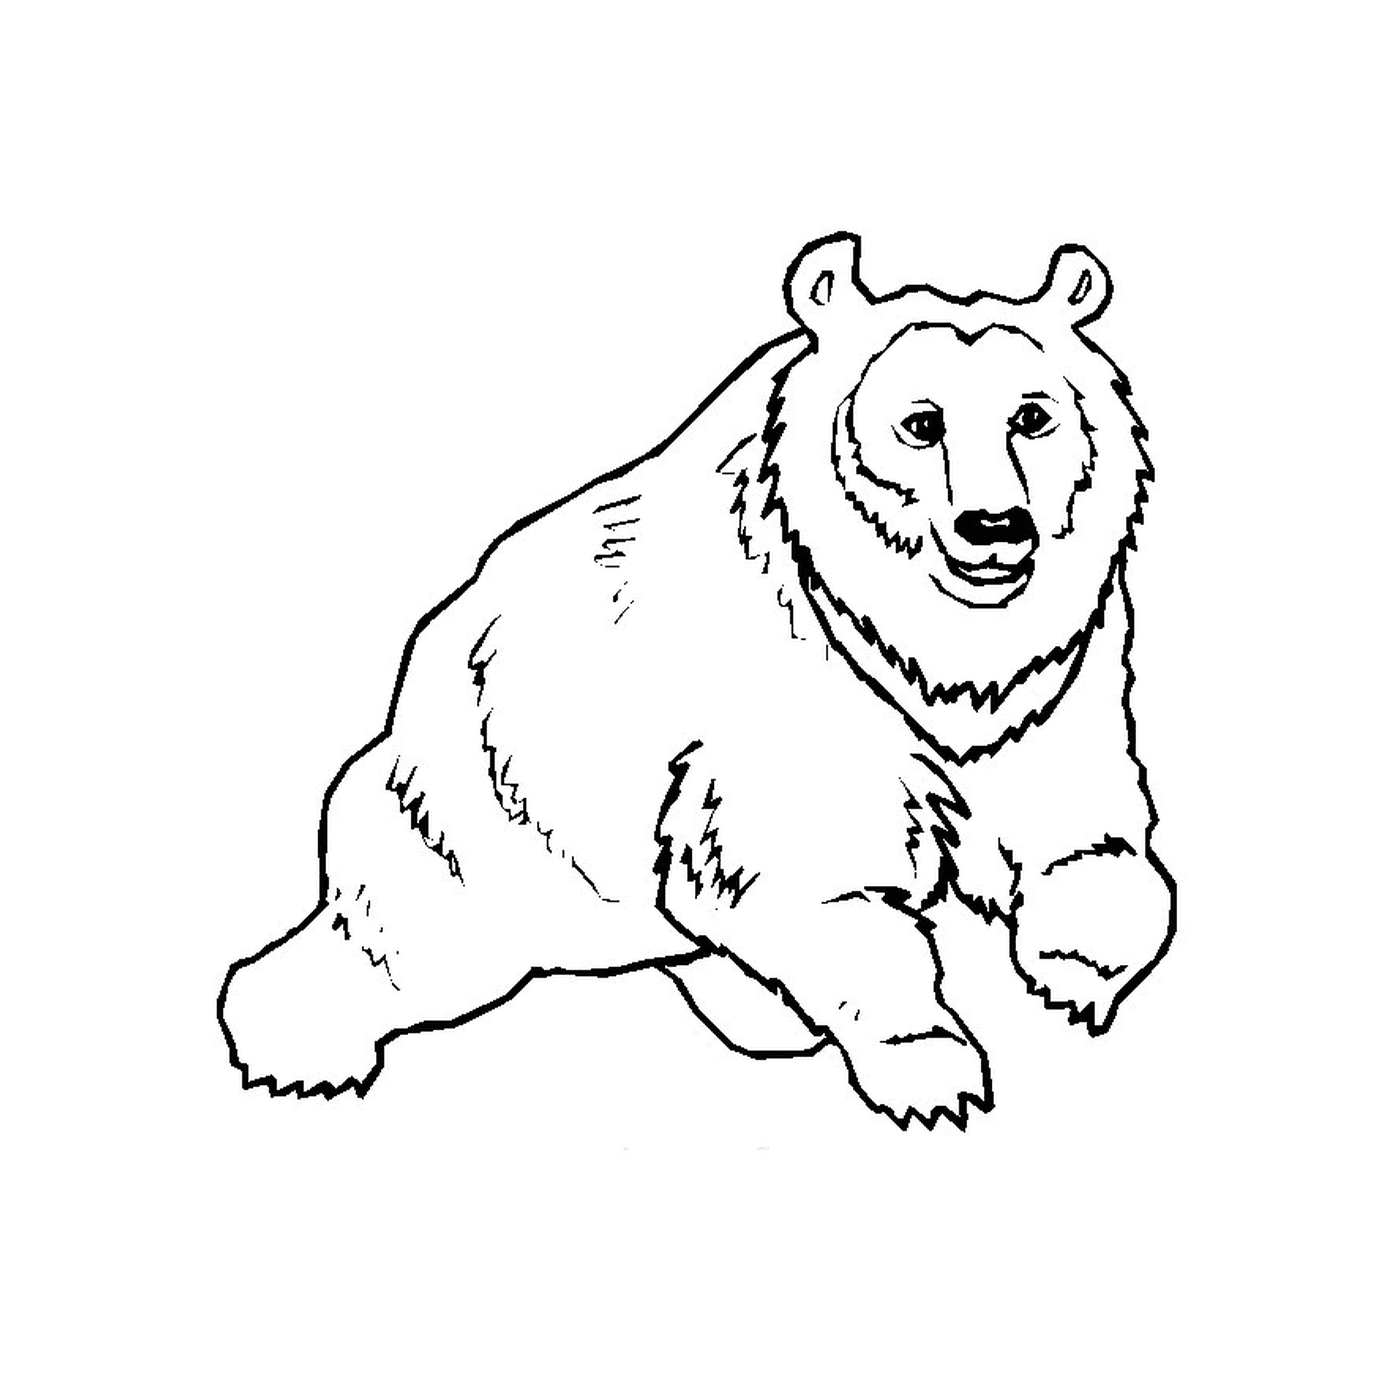  熊熊 